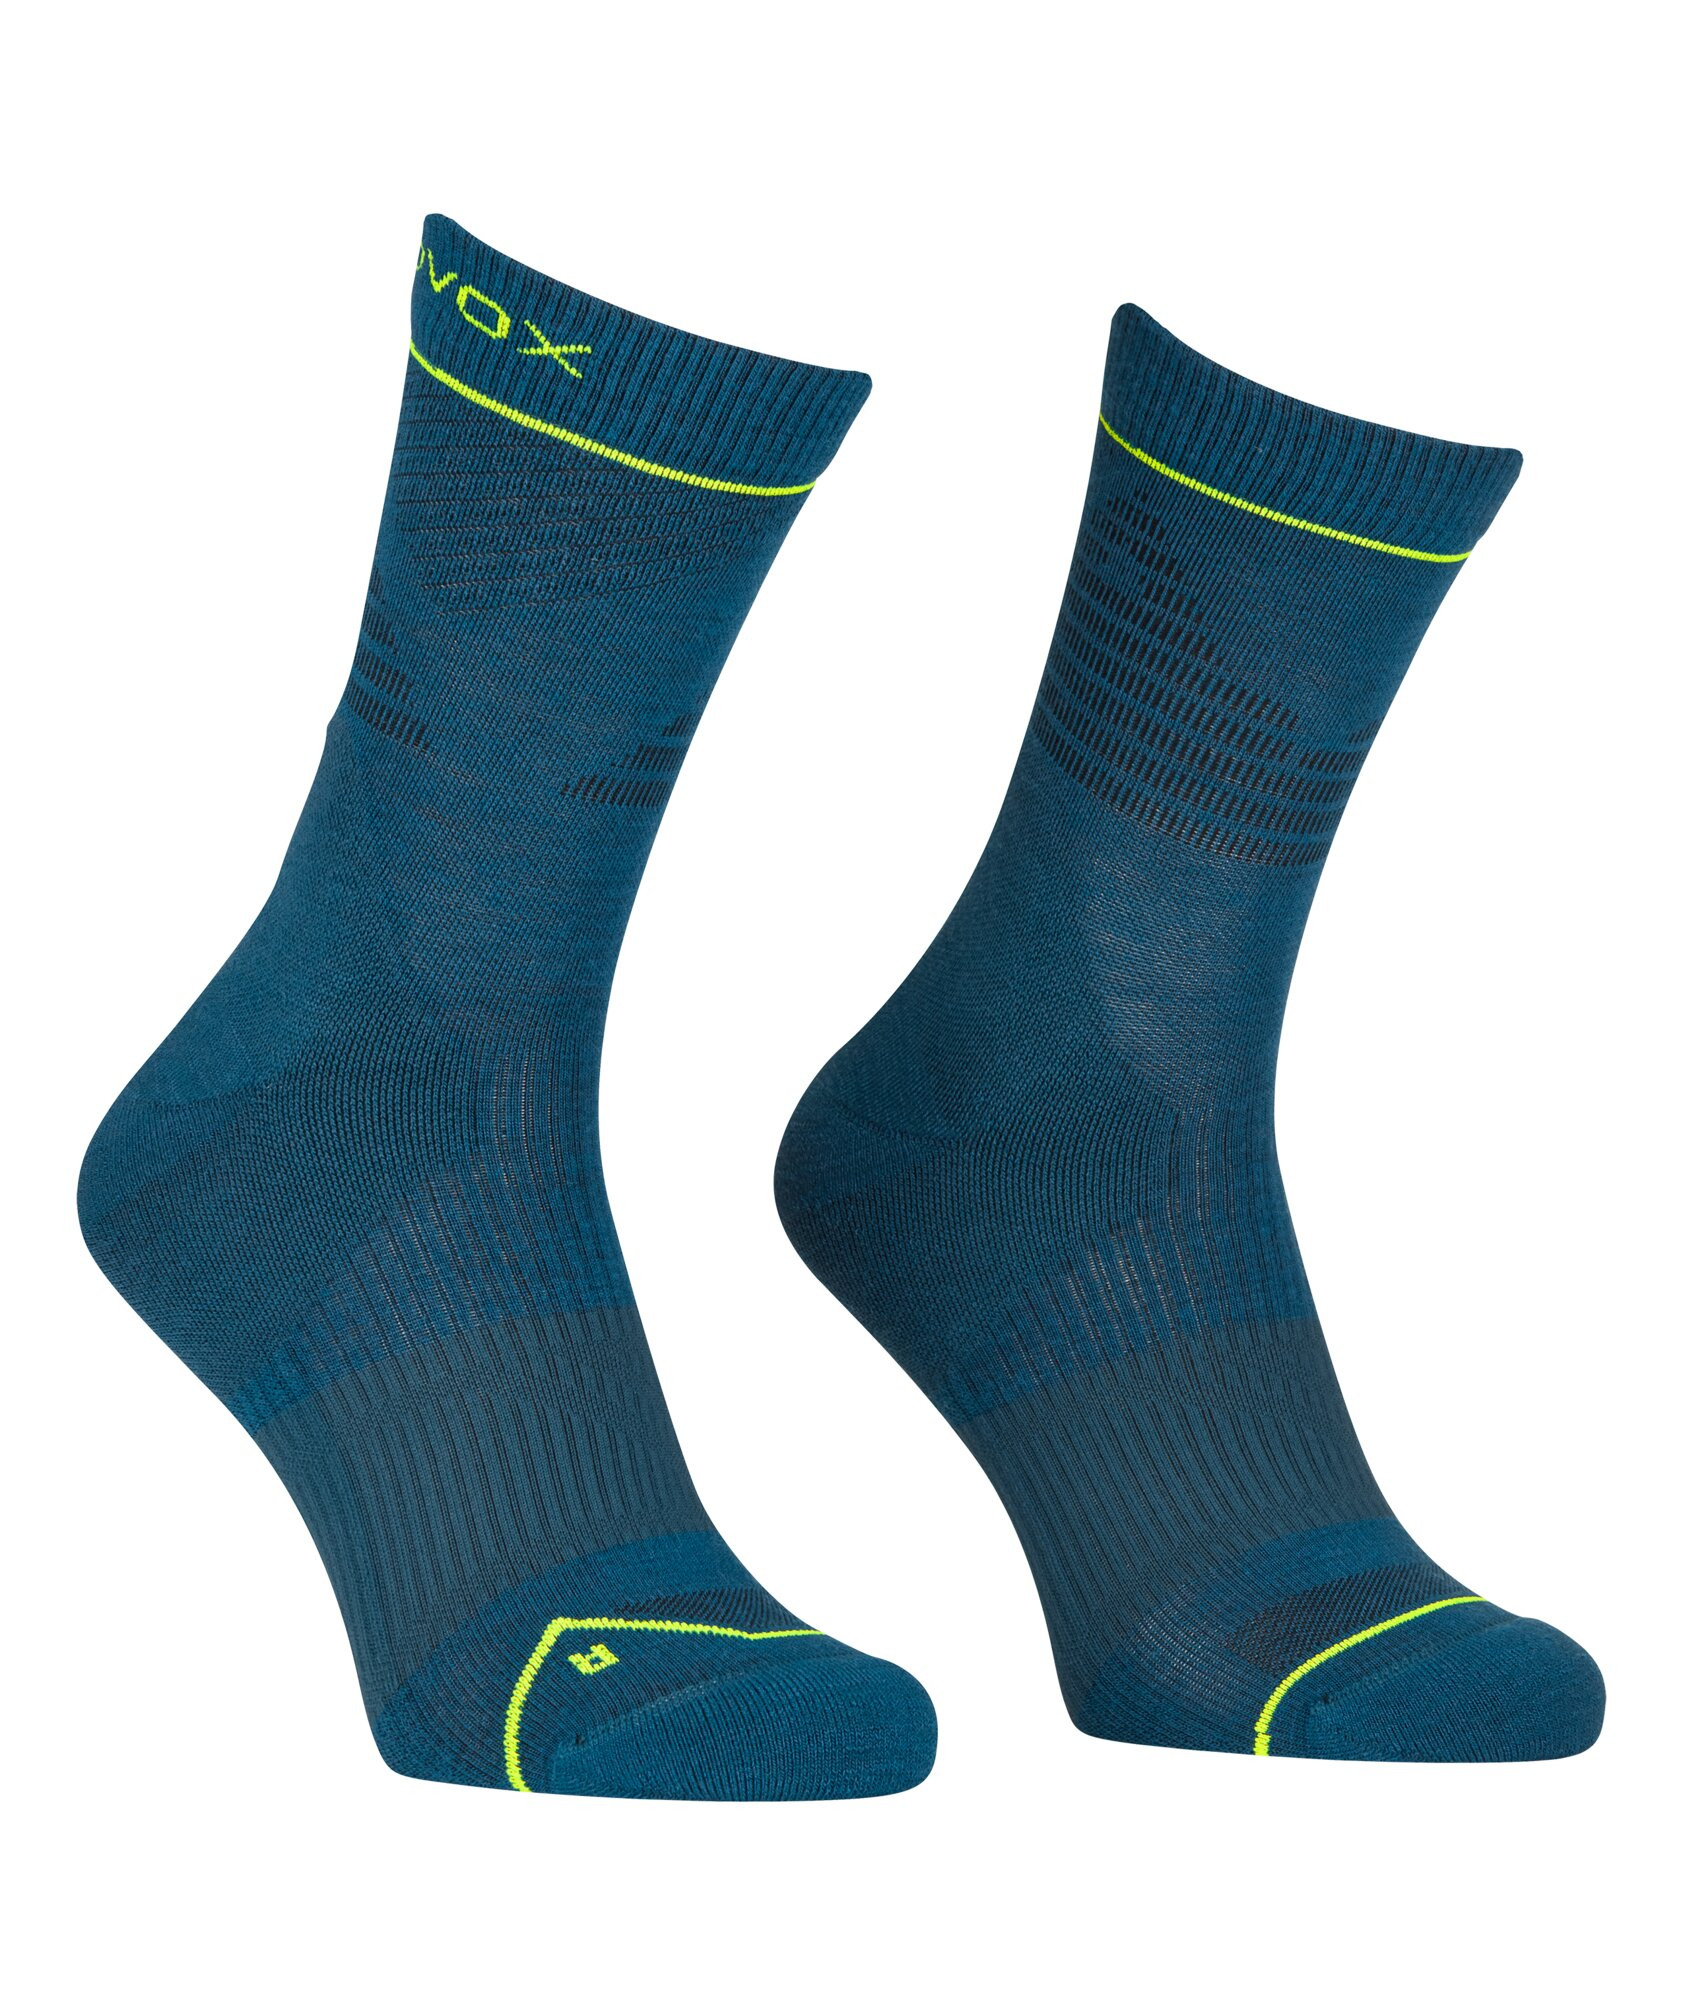 Ortovox Ski Tour Comp Long Socks M calcetines de lana merino para hombre